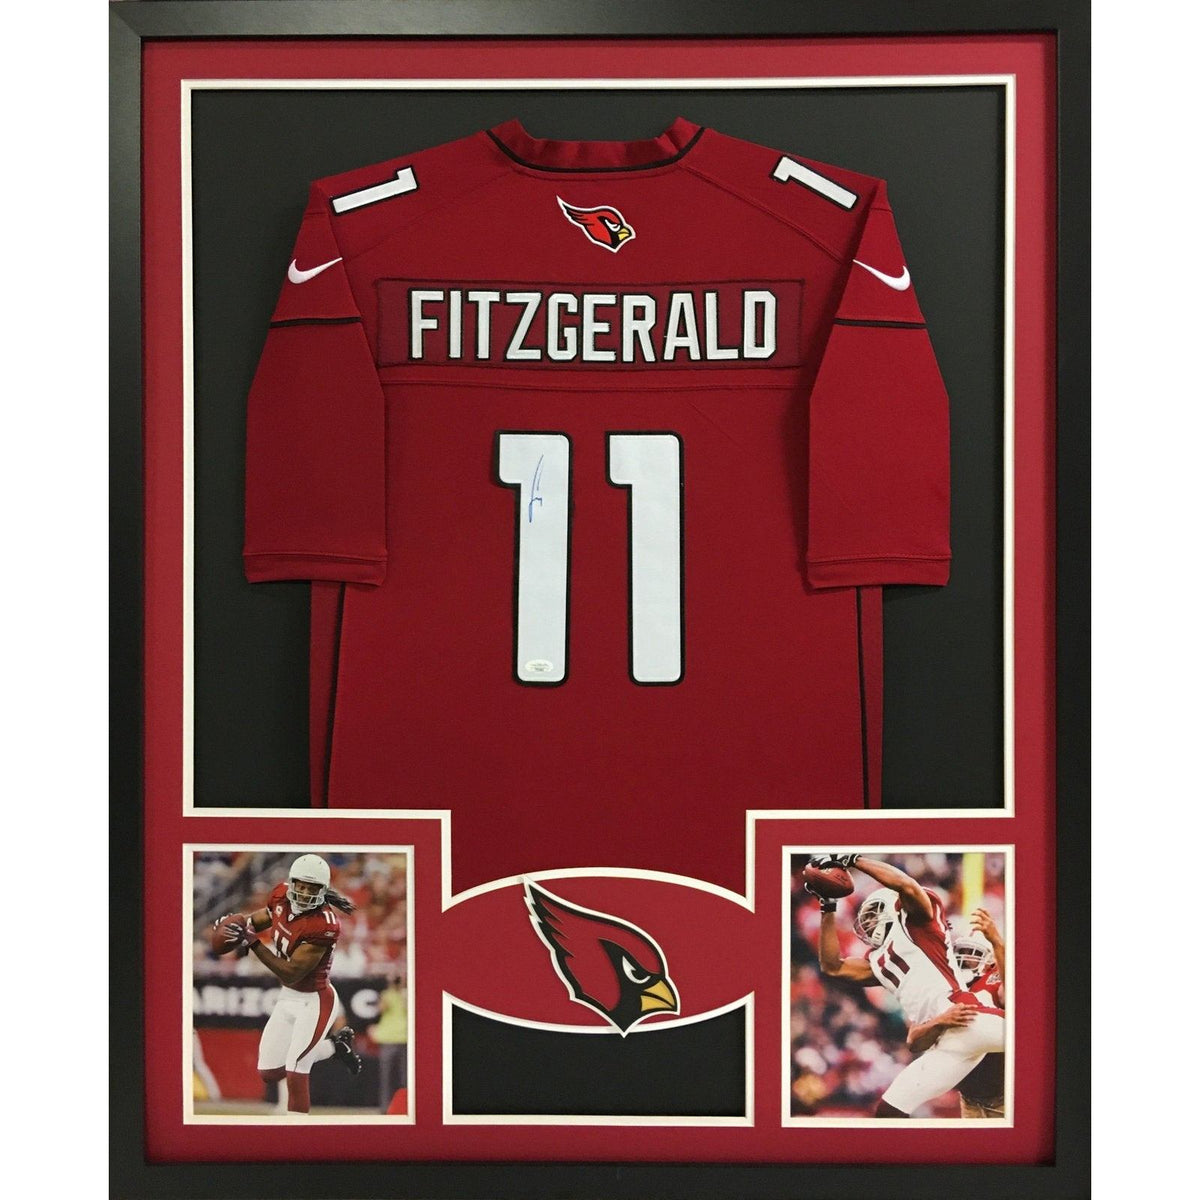 Larry Fitzgerald Signed Framed Jersey JSA Autographed Arizona Cardinal